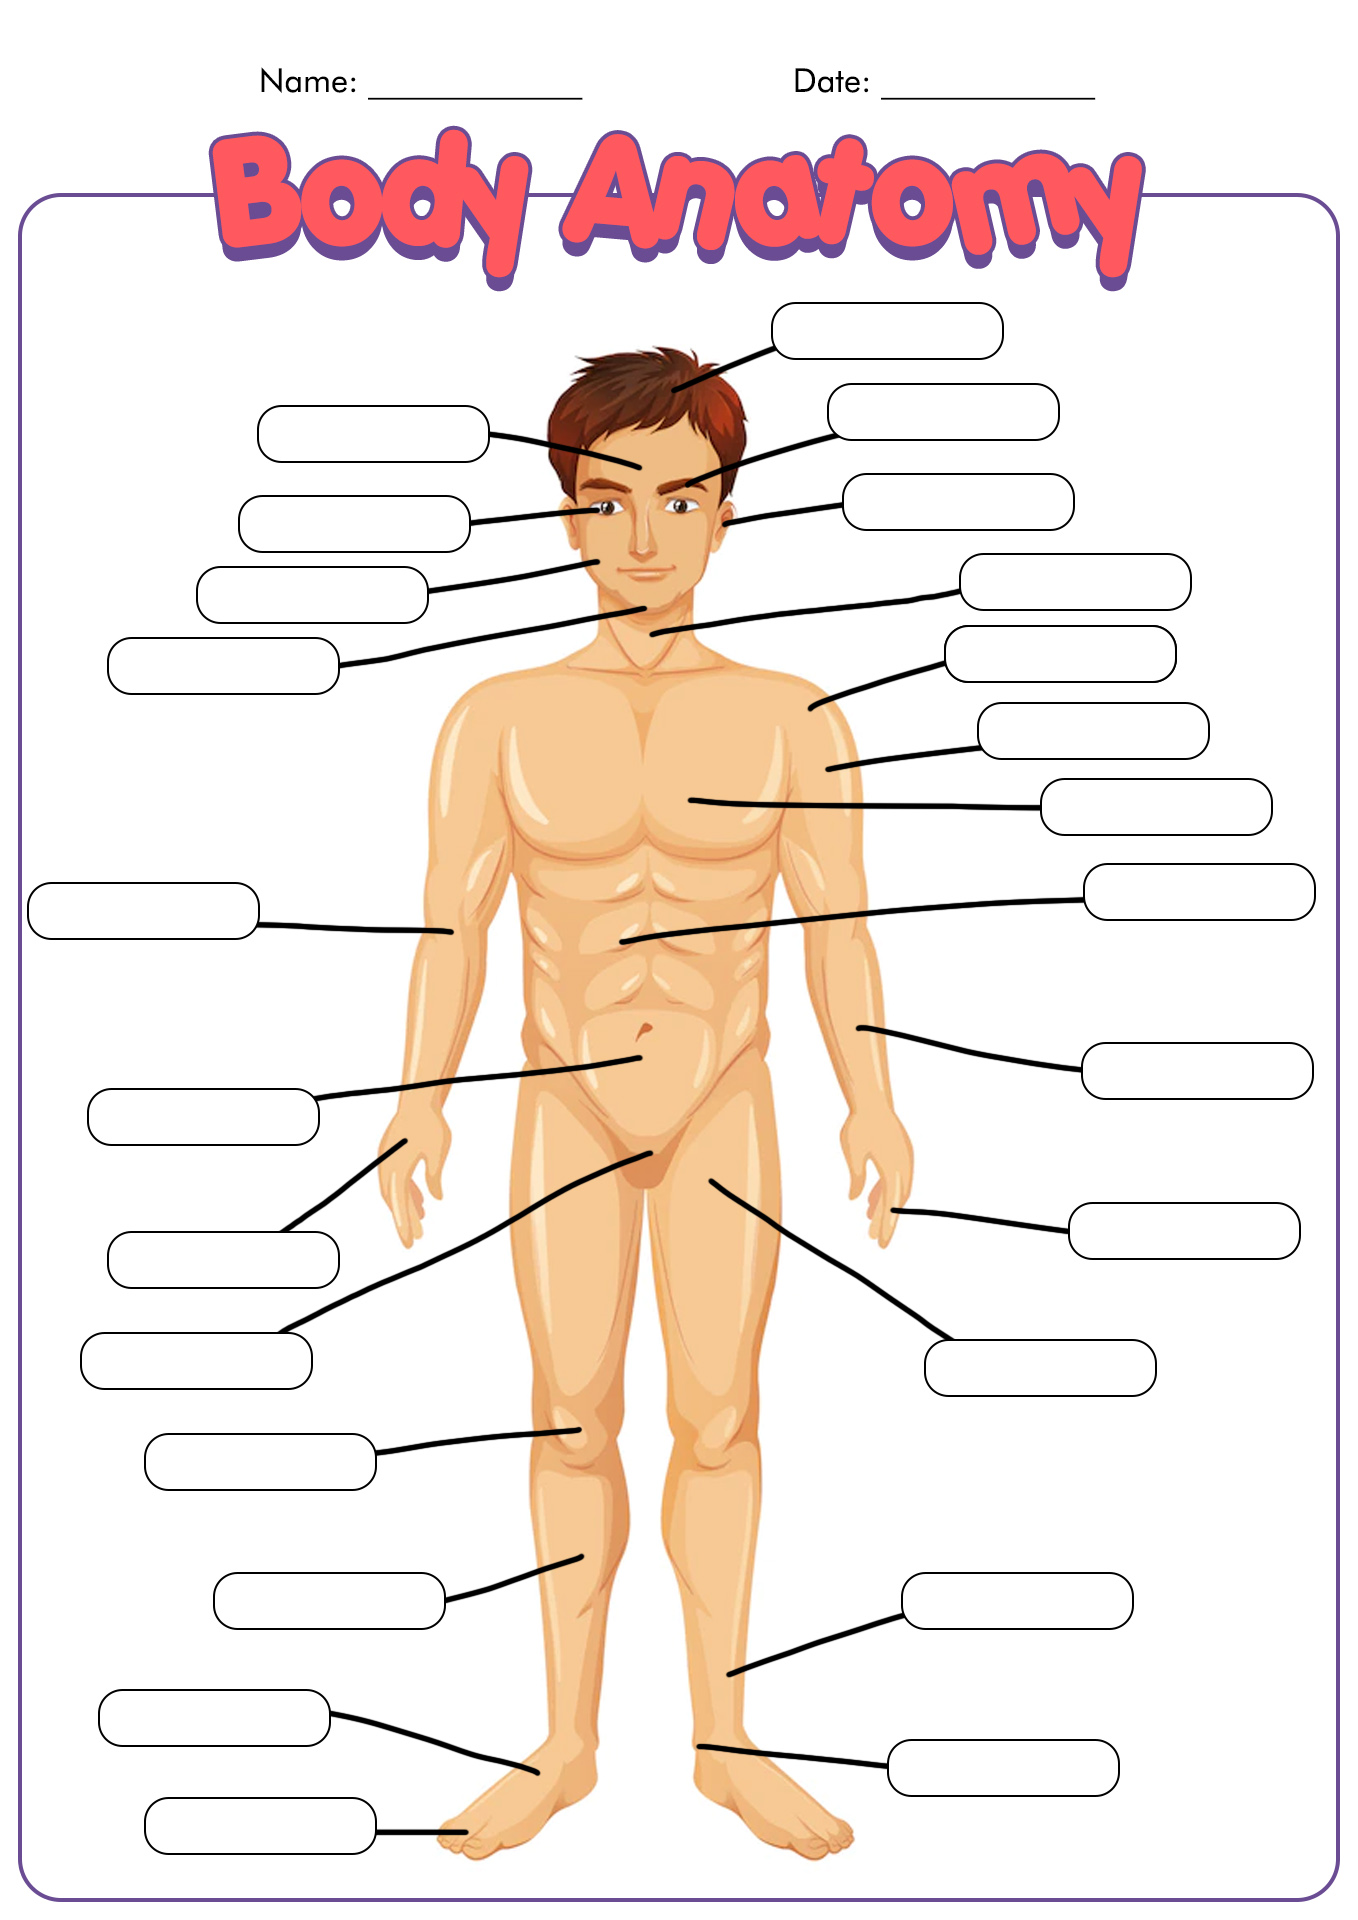 Human Anatomy Body Landmarks Worksheet Image